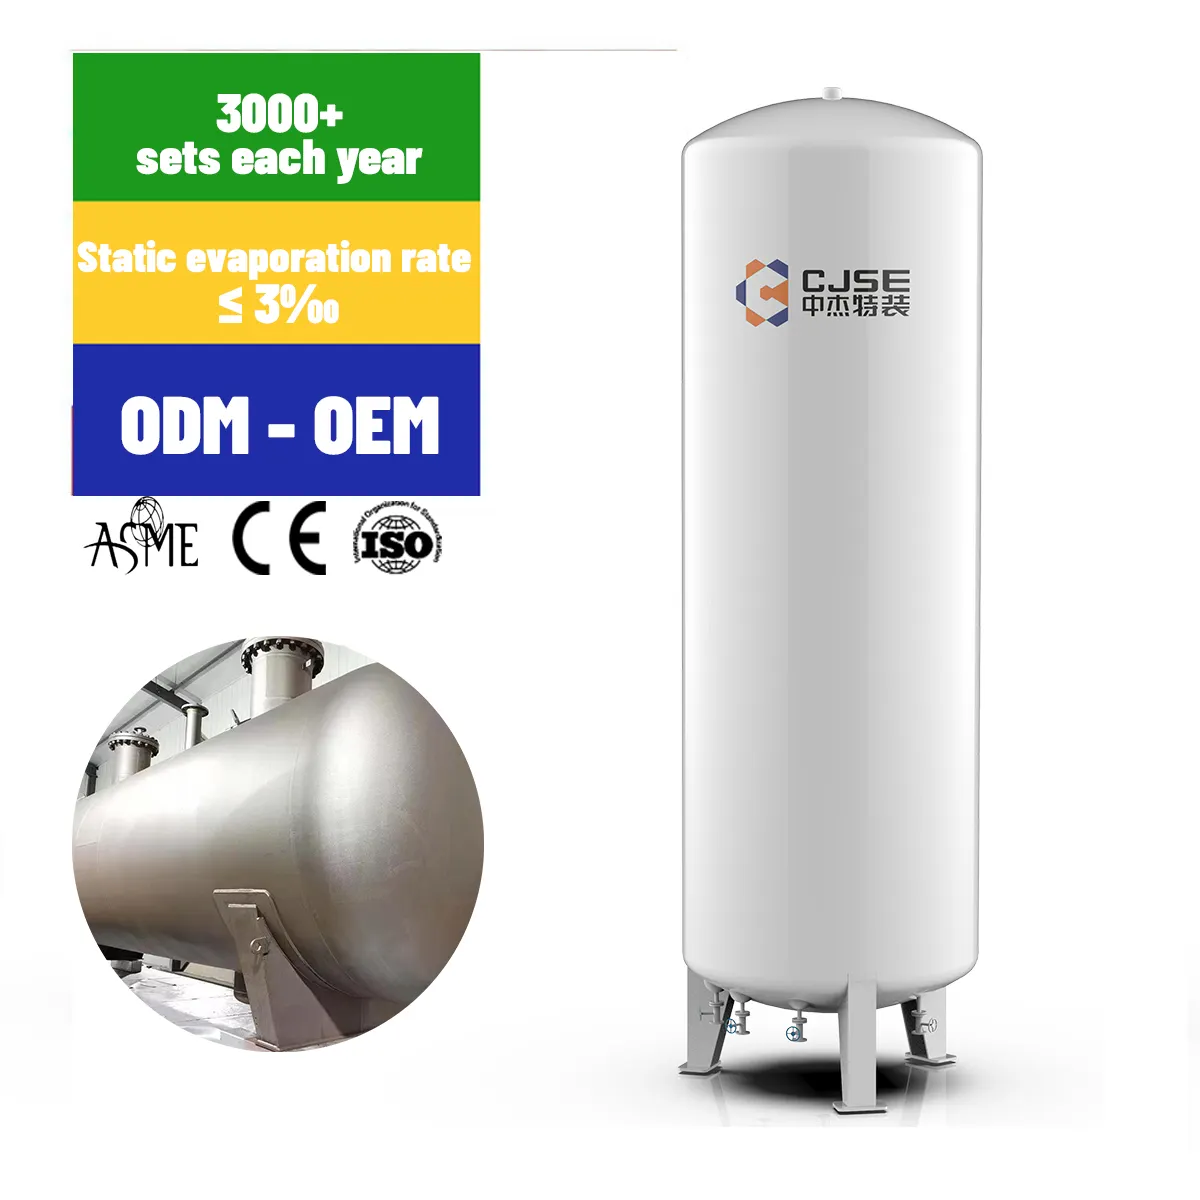 CJSE Low Price 5m3 10m3 20m3 50m3 75m3 bulk co2 storage tank Liquid CO2 Storage Tank for Drinks Plant Use